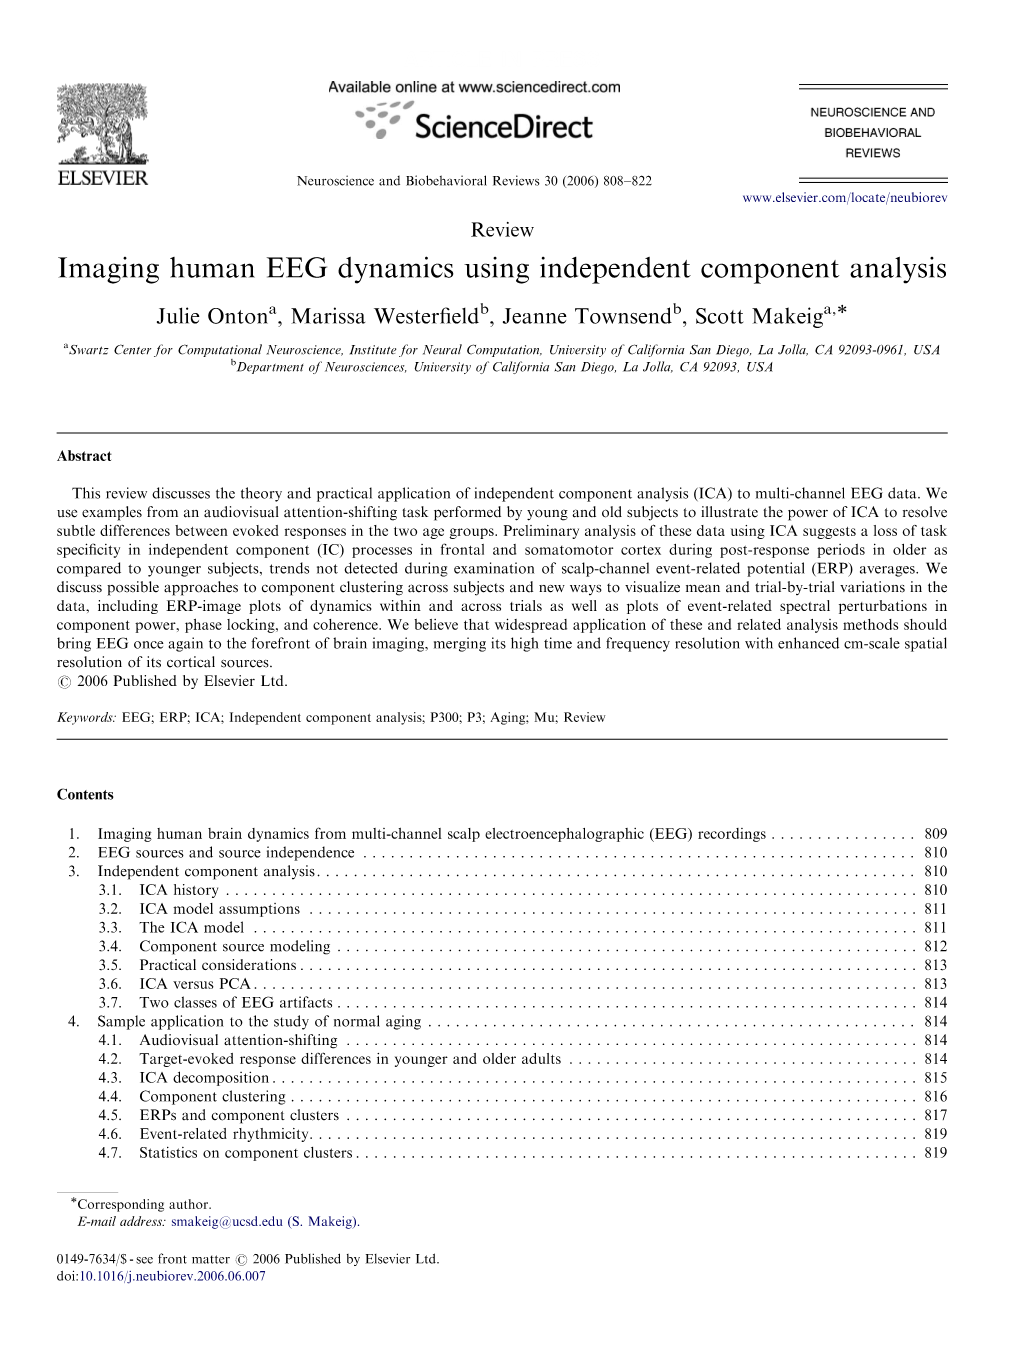 Imaging Human EEG Dynamics Using Independent Component Analysis